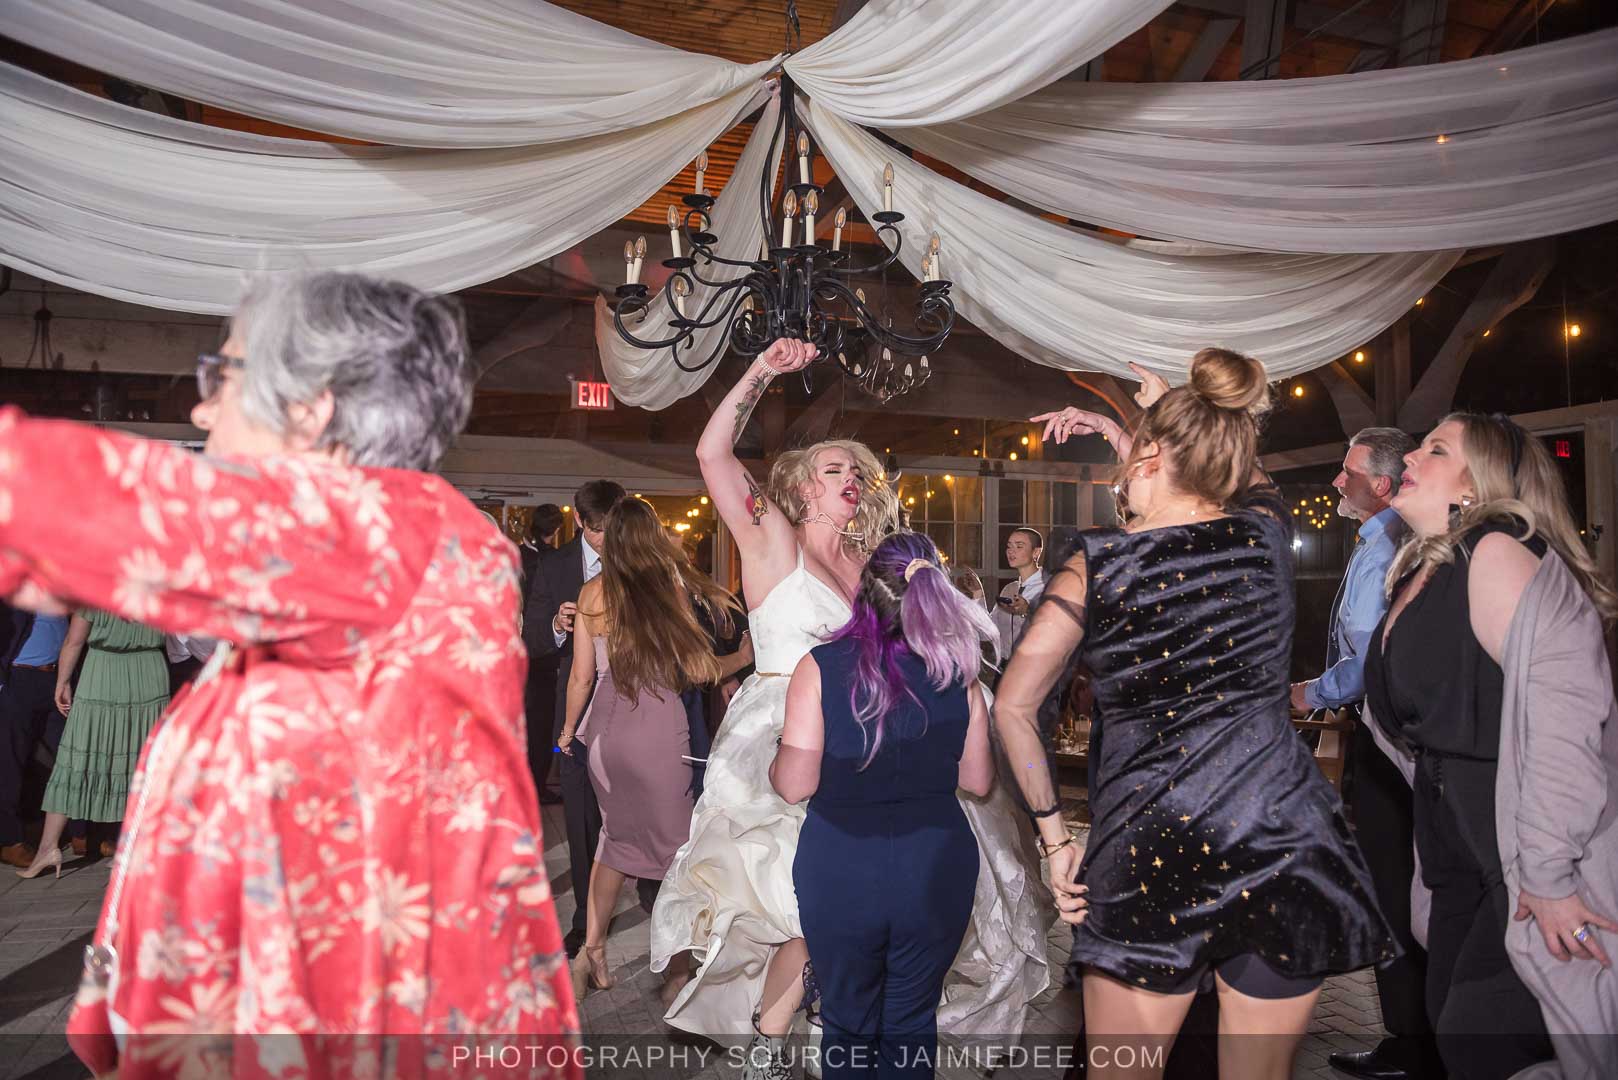 Rocky's Lake Estate Wedding Venue - reception - wedding guest dancing inside pavilion with ceiling drapes - bride dancing hard